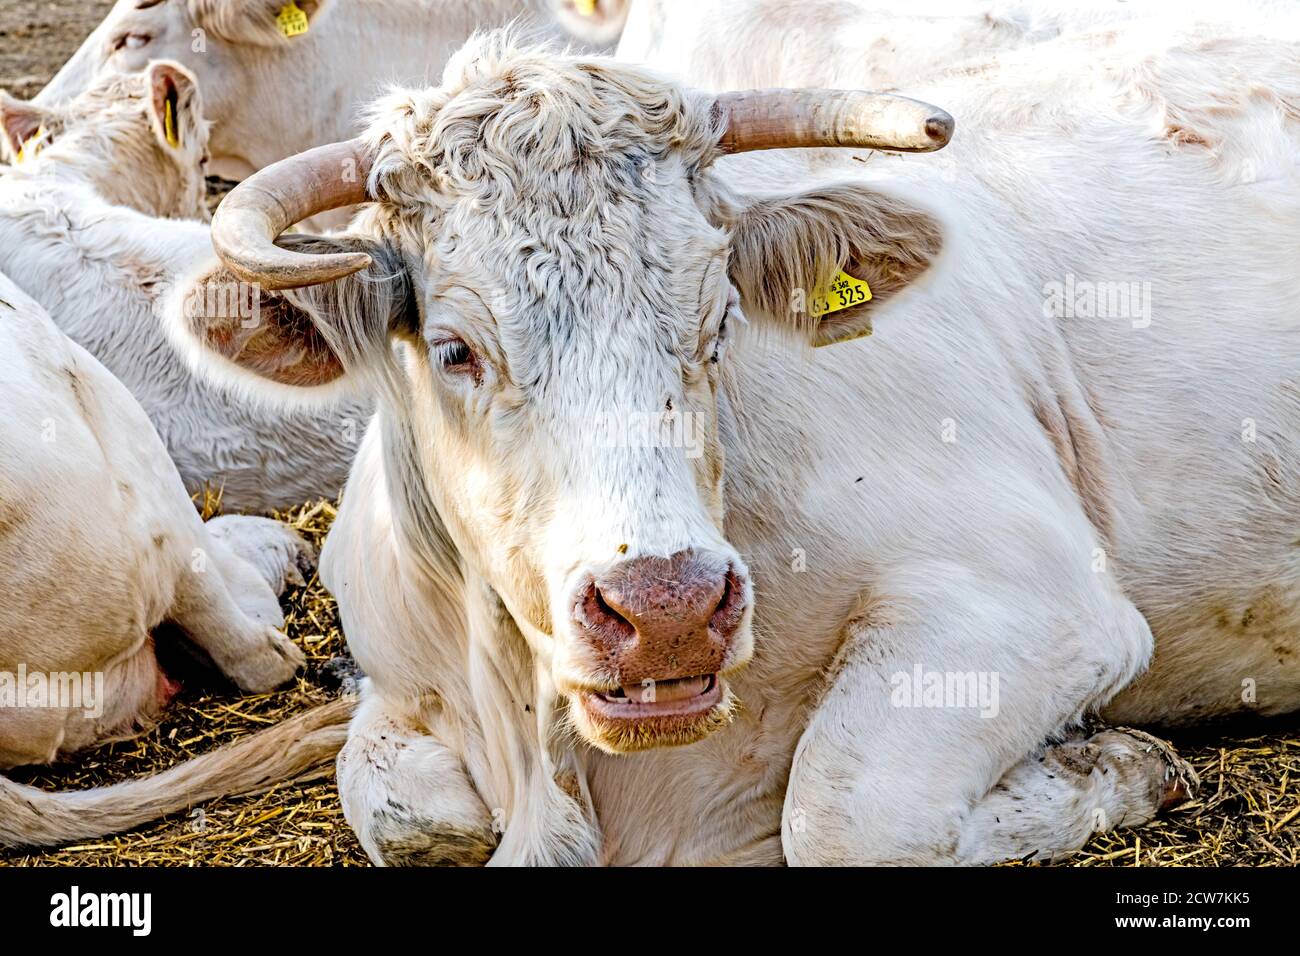 Mucche all'aperto sul pascolo; Kuehe auf der Weide Foto Stock